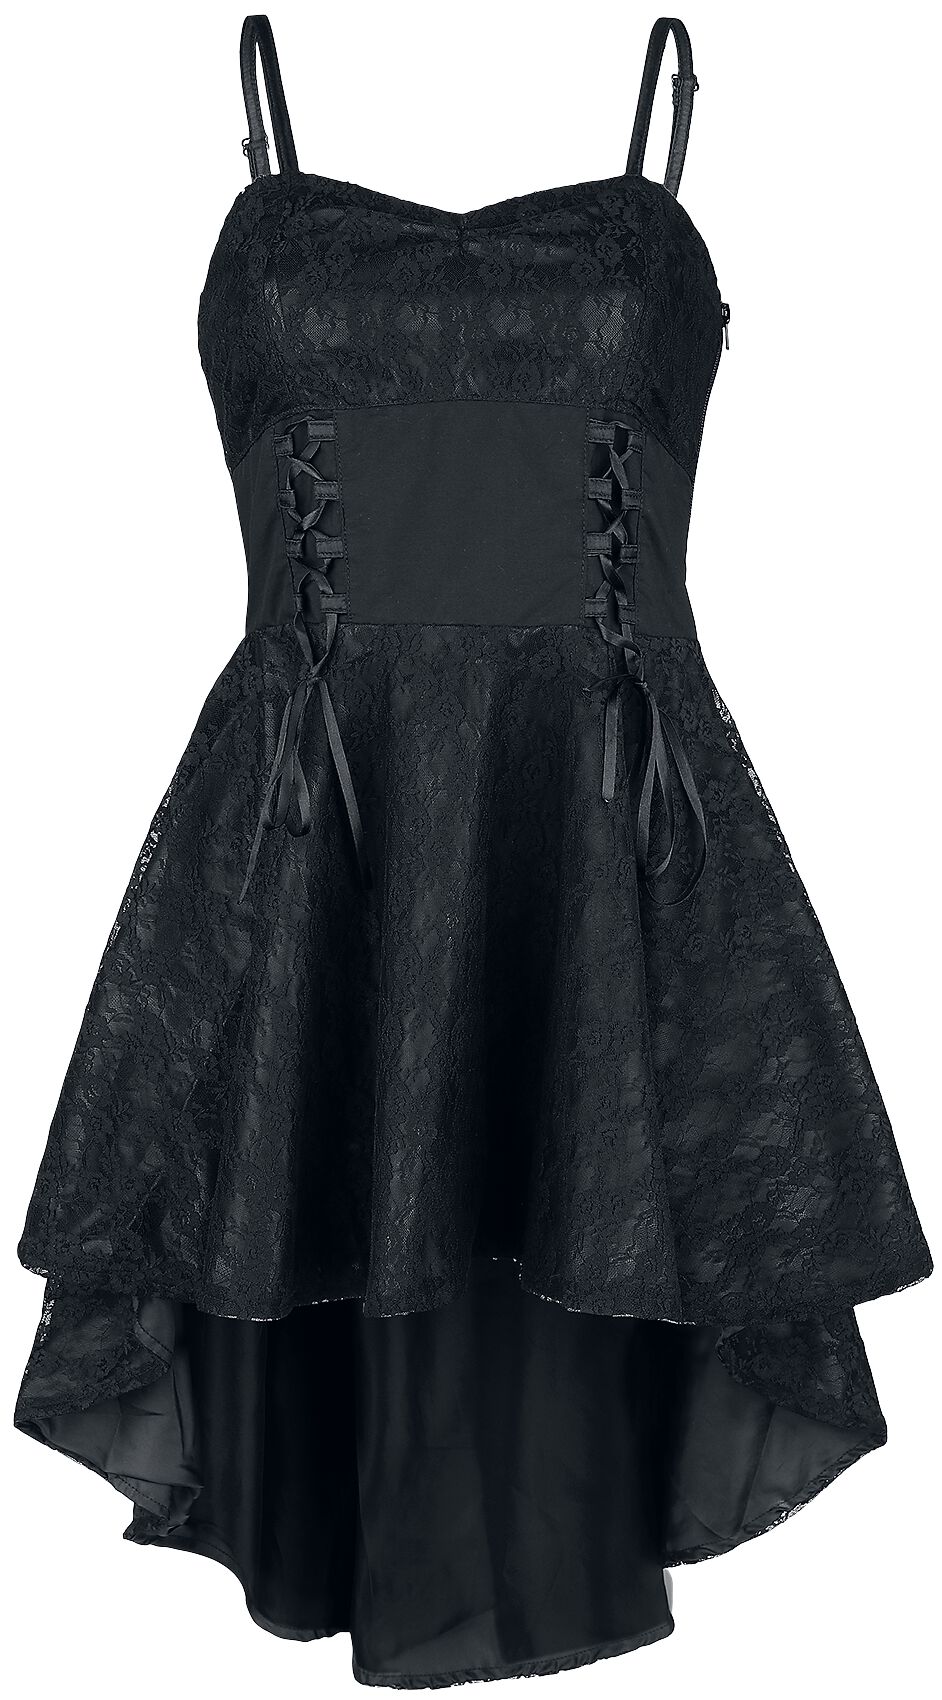 Poizen Industries Aurelia Dress Short dress black